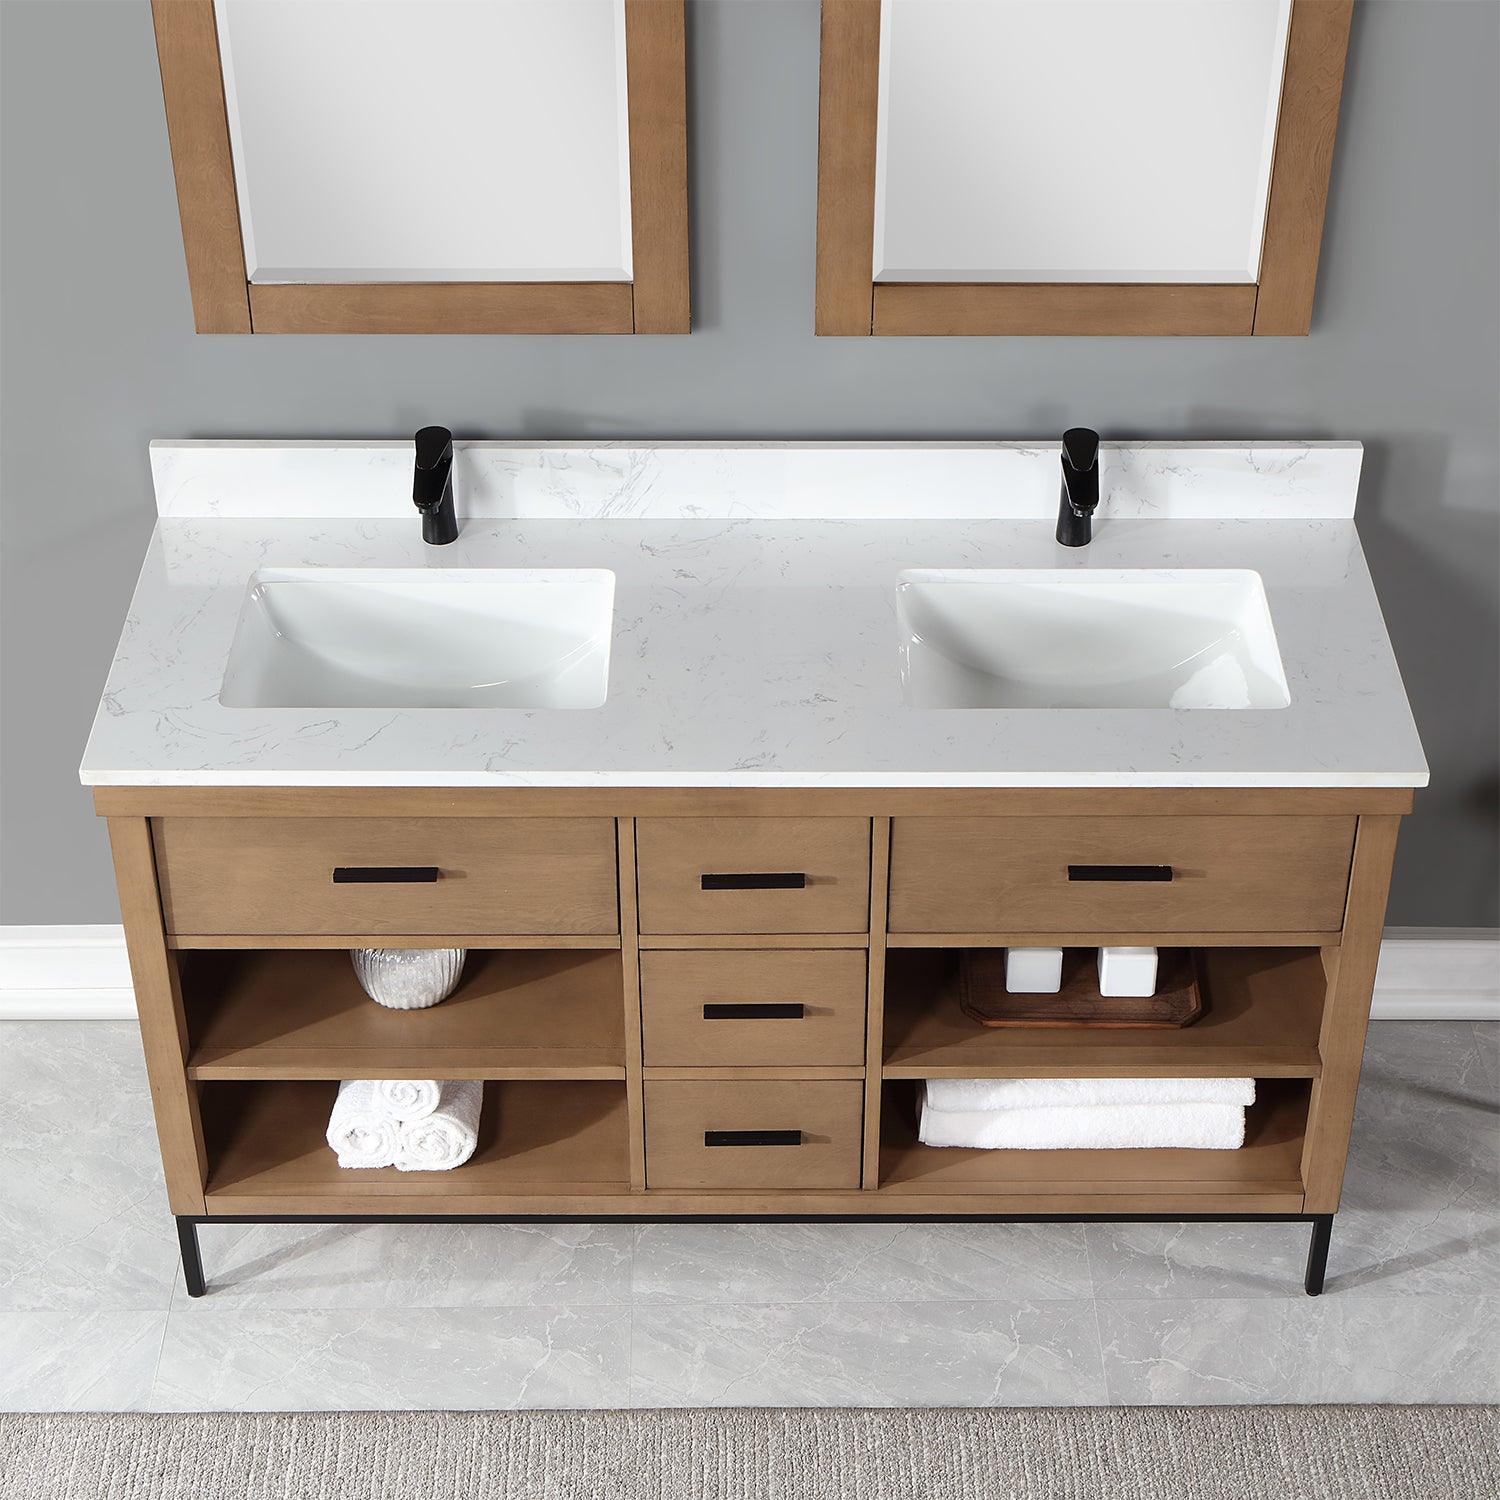 
  
  Altair Kesia Double Bathroom Vanity Set with Carrara White Composite Stone Countertop, Optional Mirror
  
